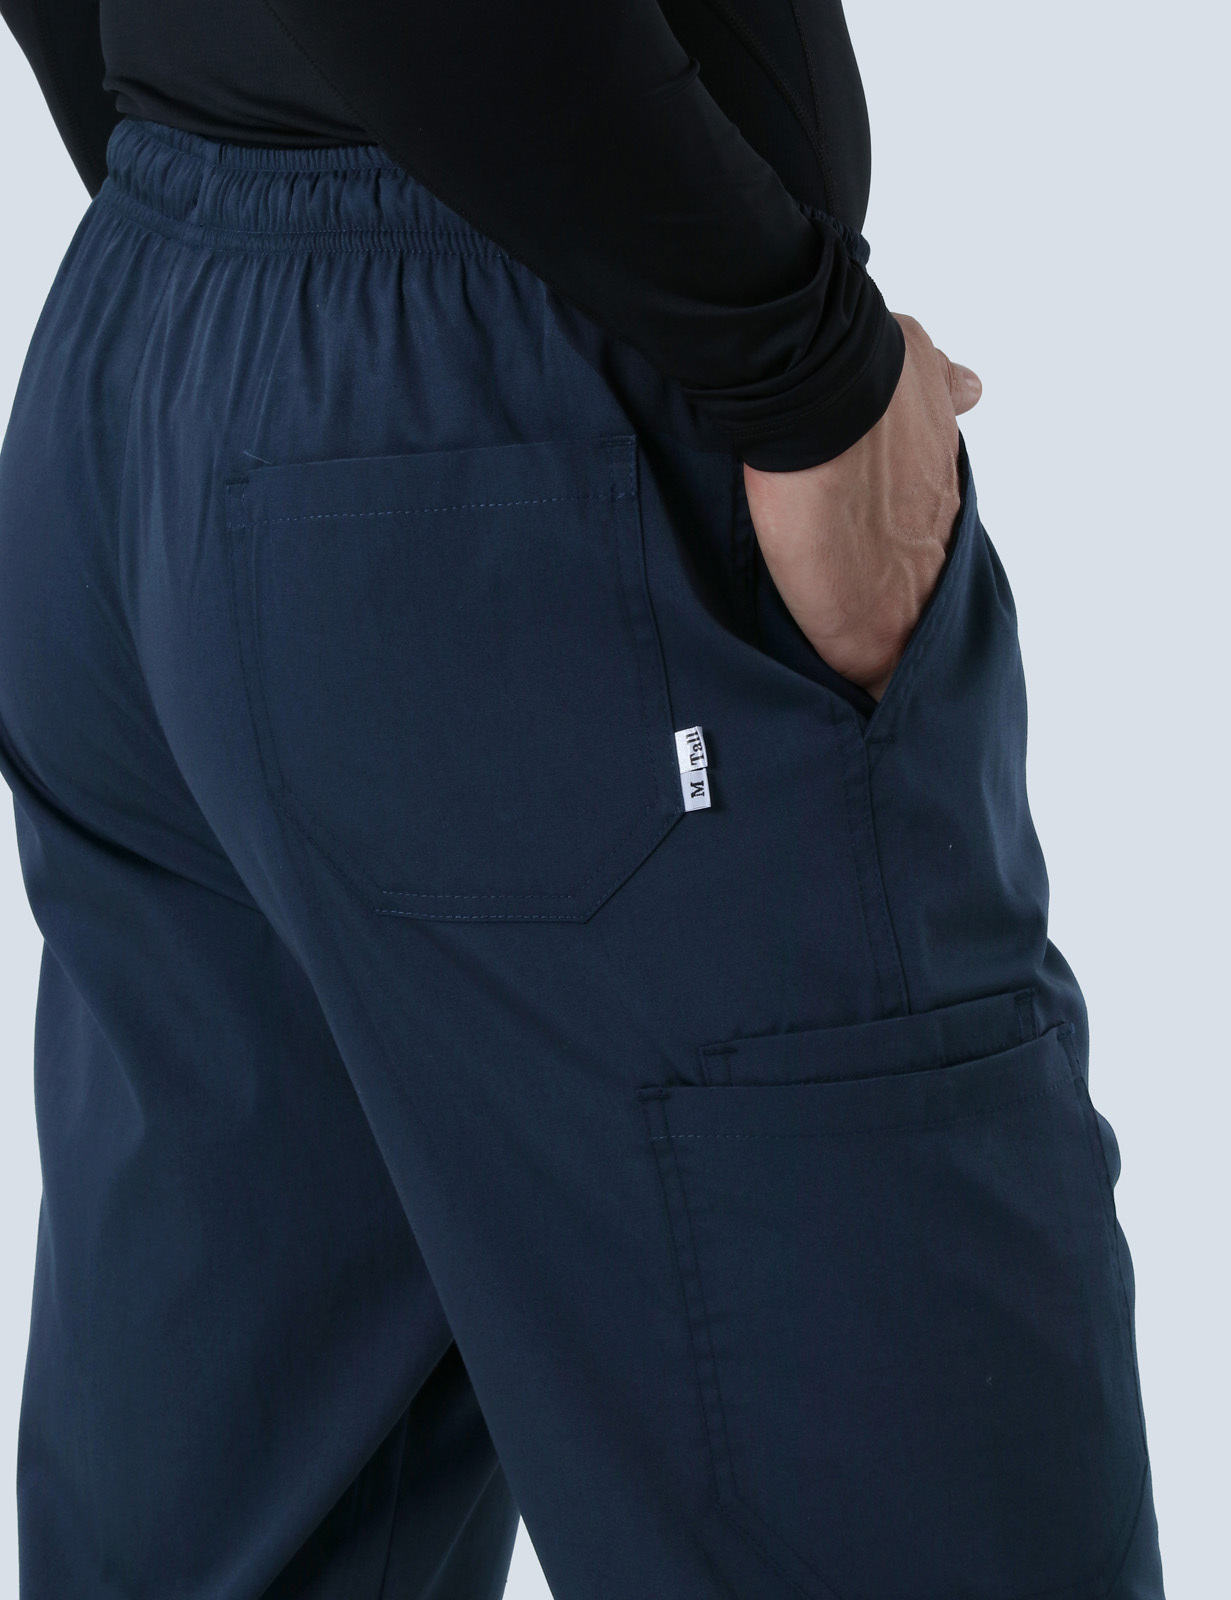 Men's Cargo Performance Pants - Navy - Large - Tall - 2